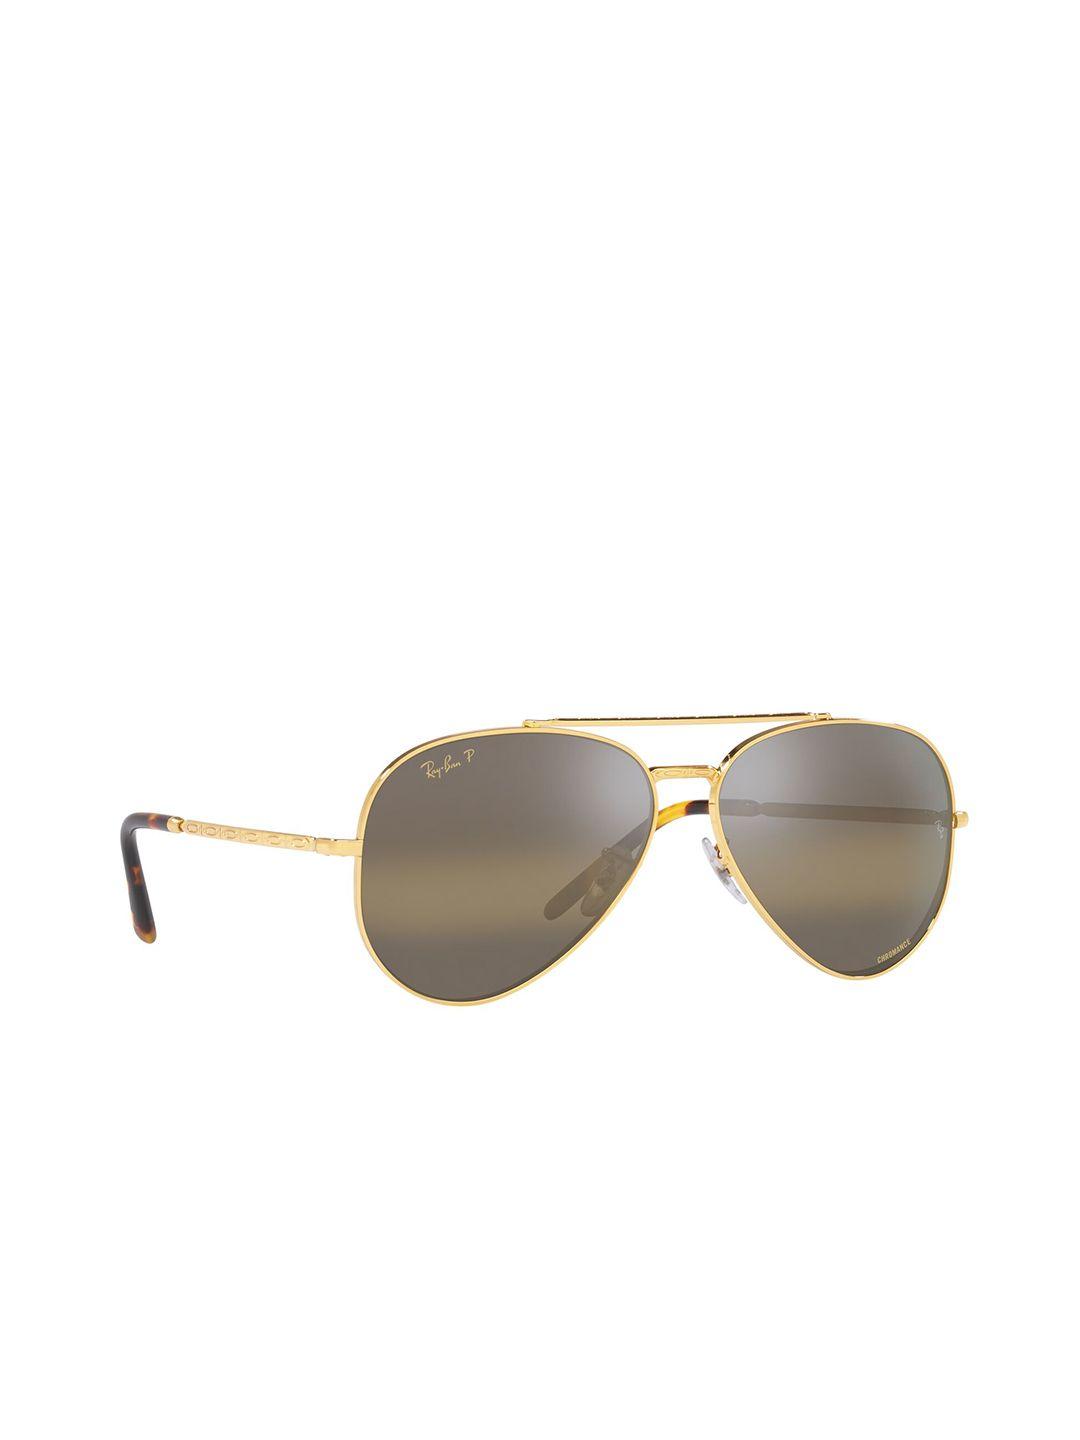 ray-ban aviator sunglasses with polarised lens 8056597665070